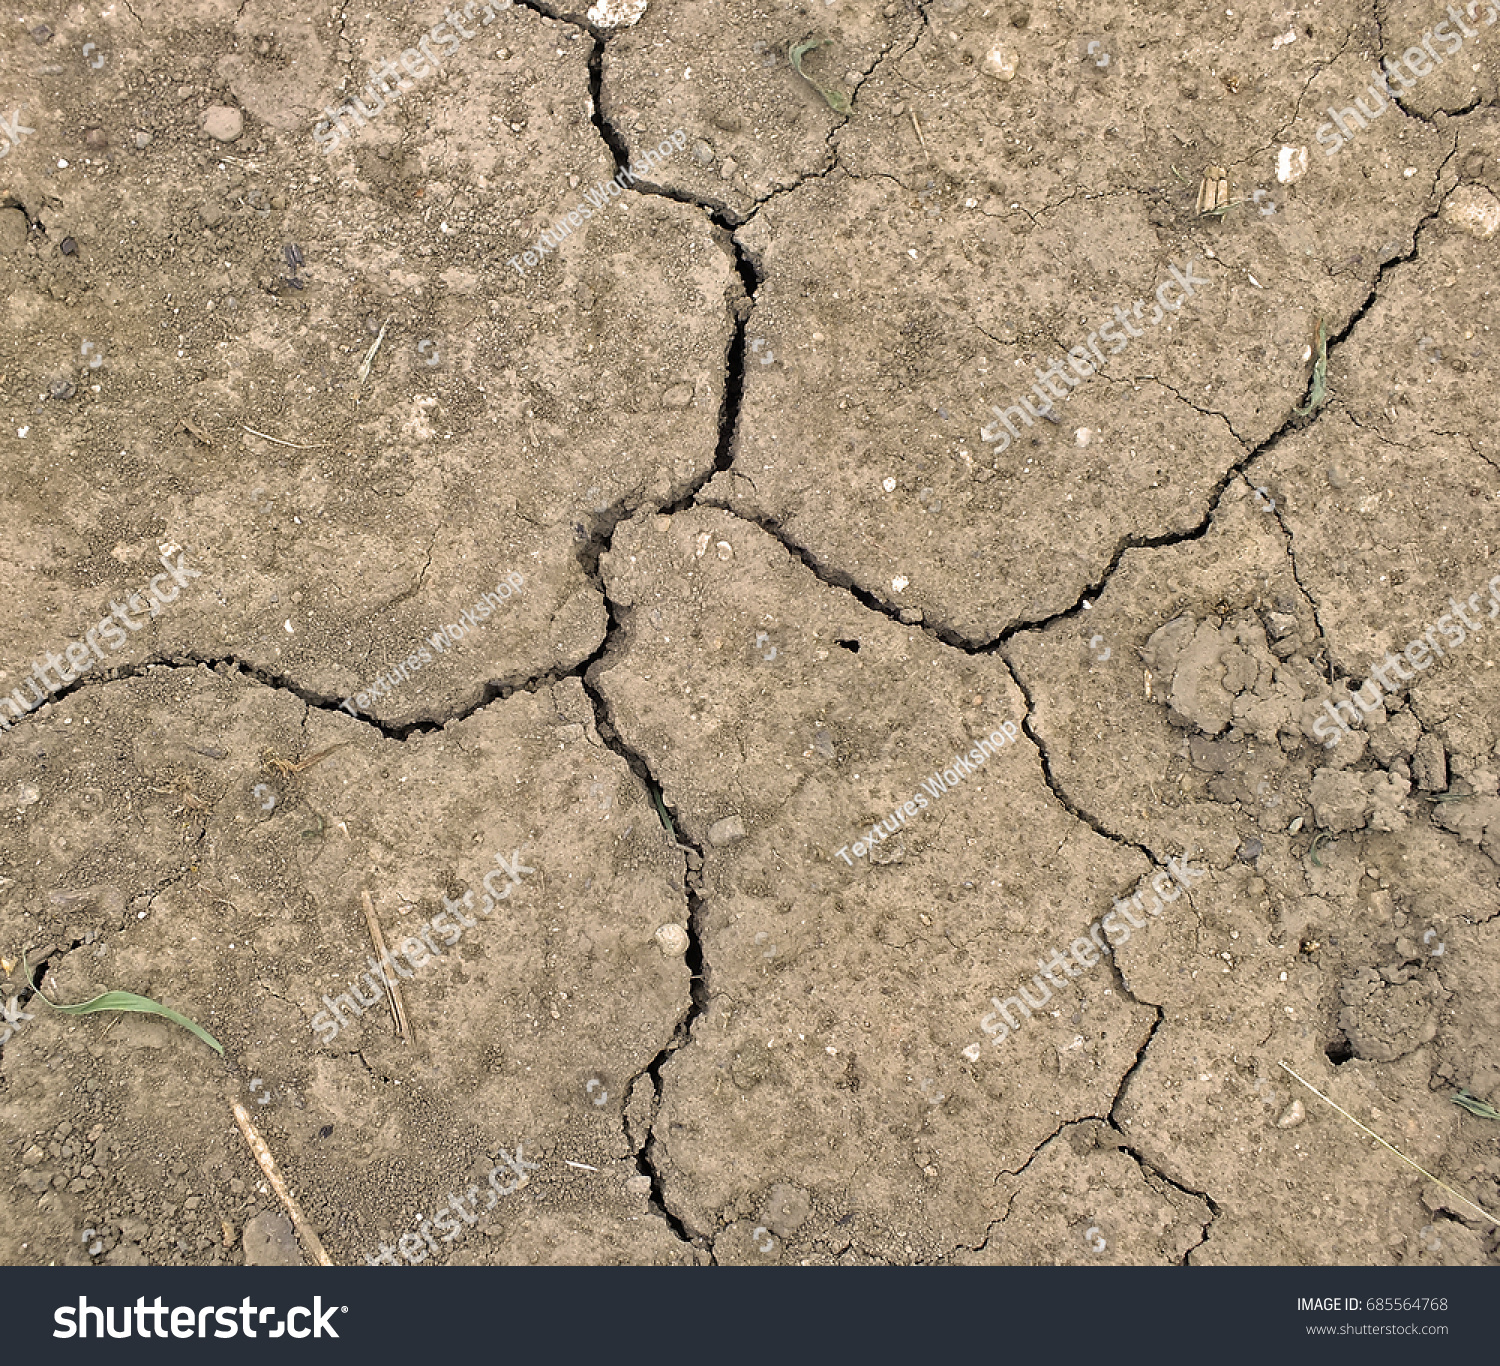 Dry Soil Texture Stock Photo 685564768 - Shutterstock